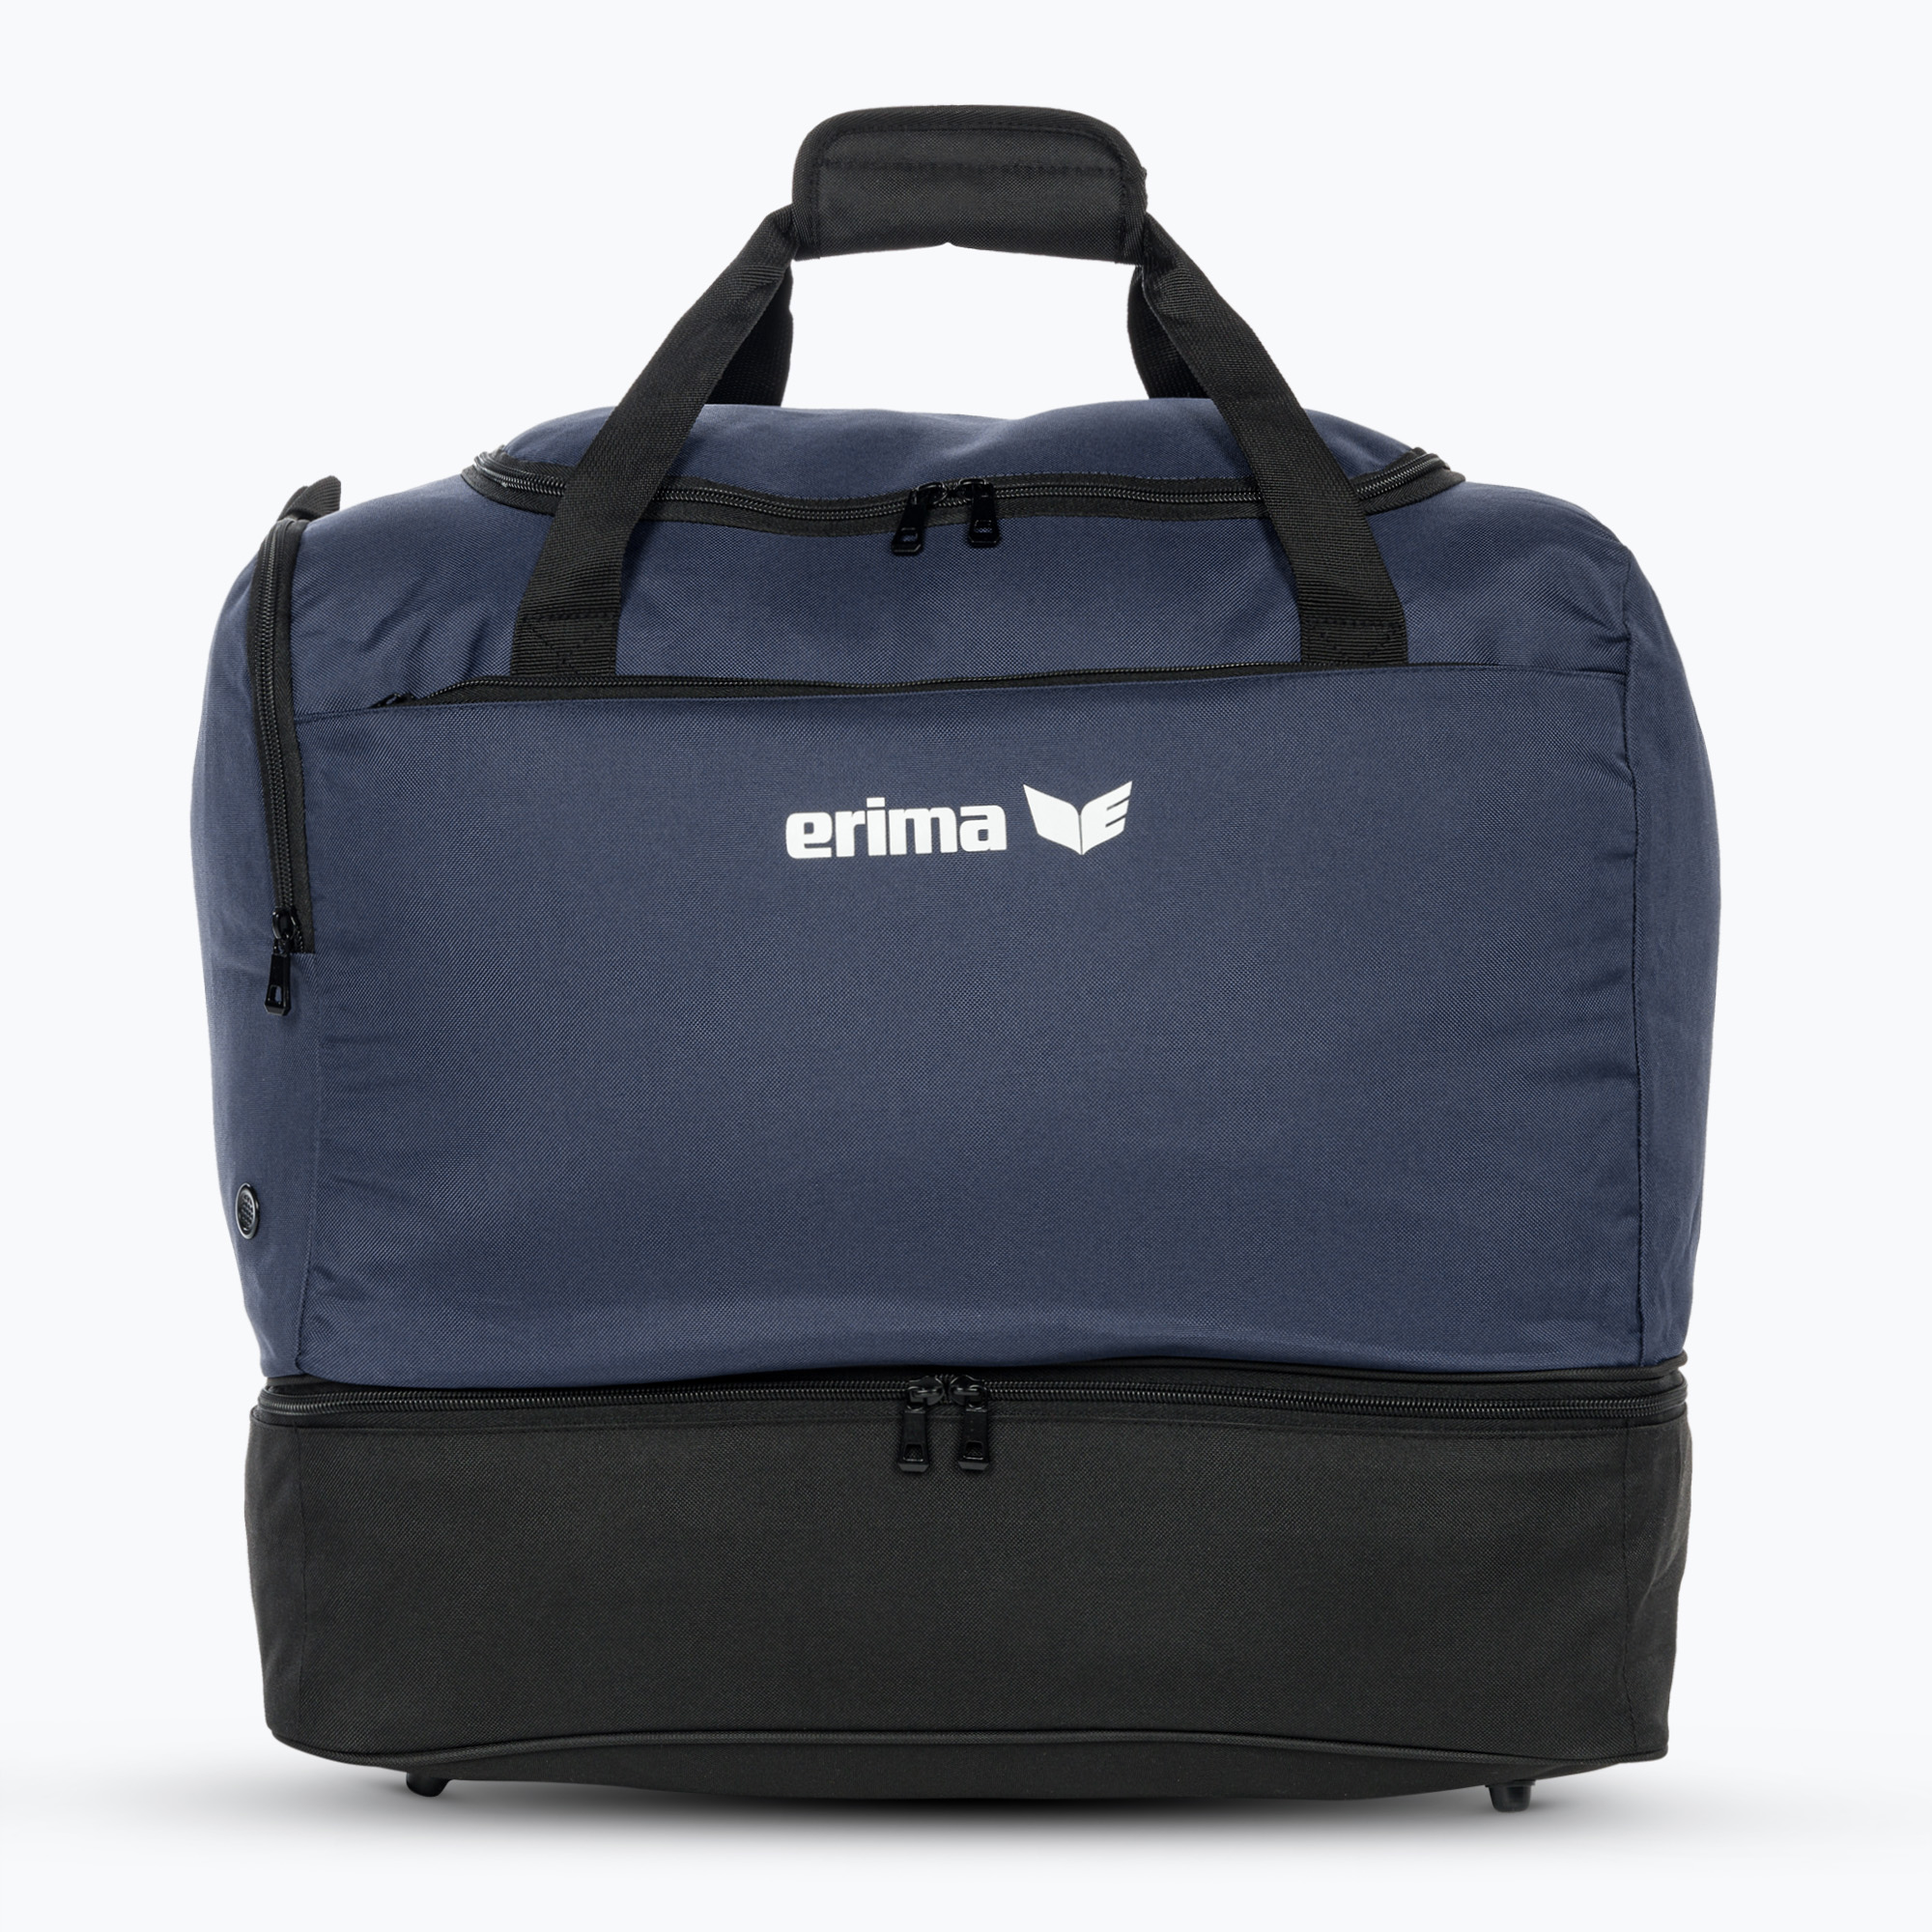 Geantă de antrenament ERIMA Team Sports Bag With Bottom Compartment 65 l new navy